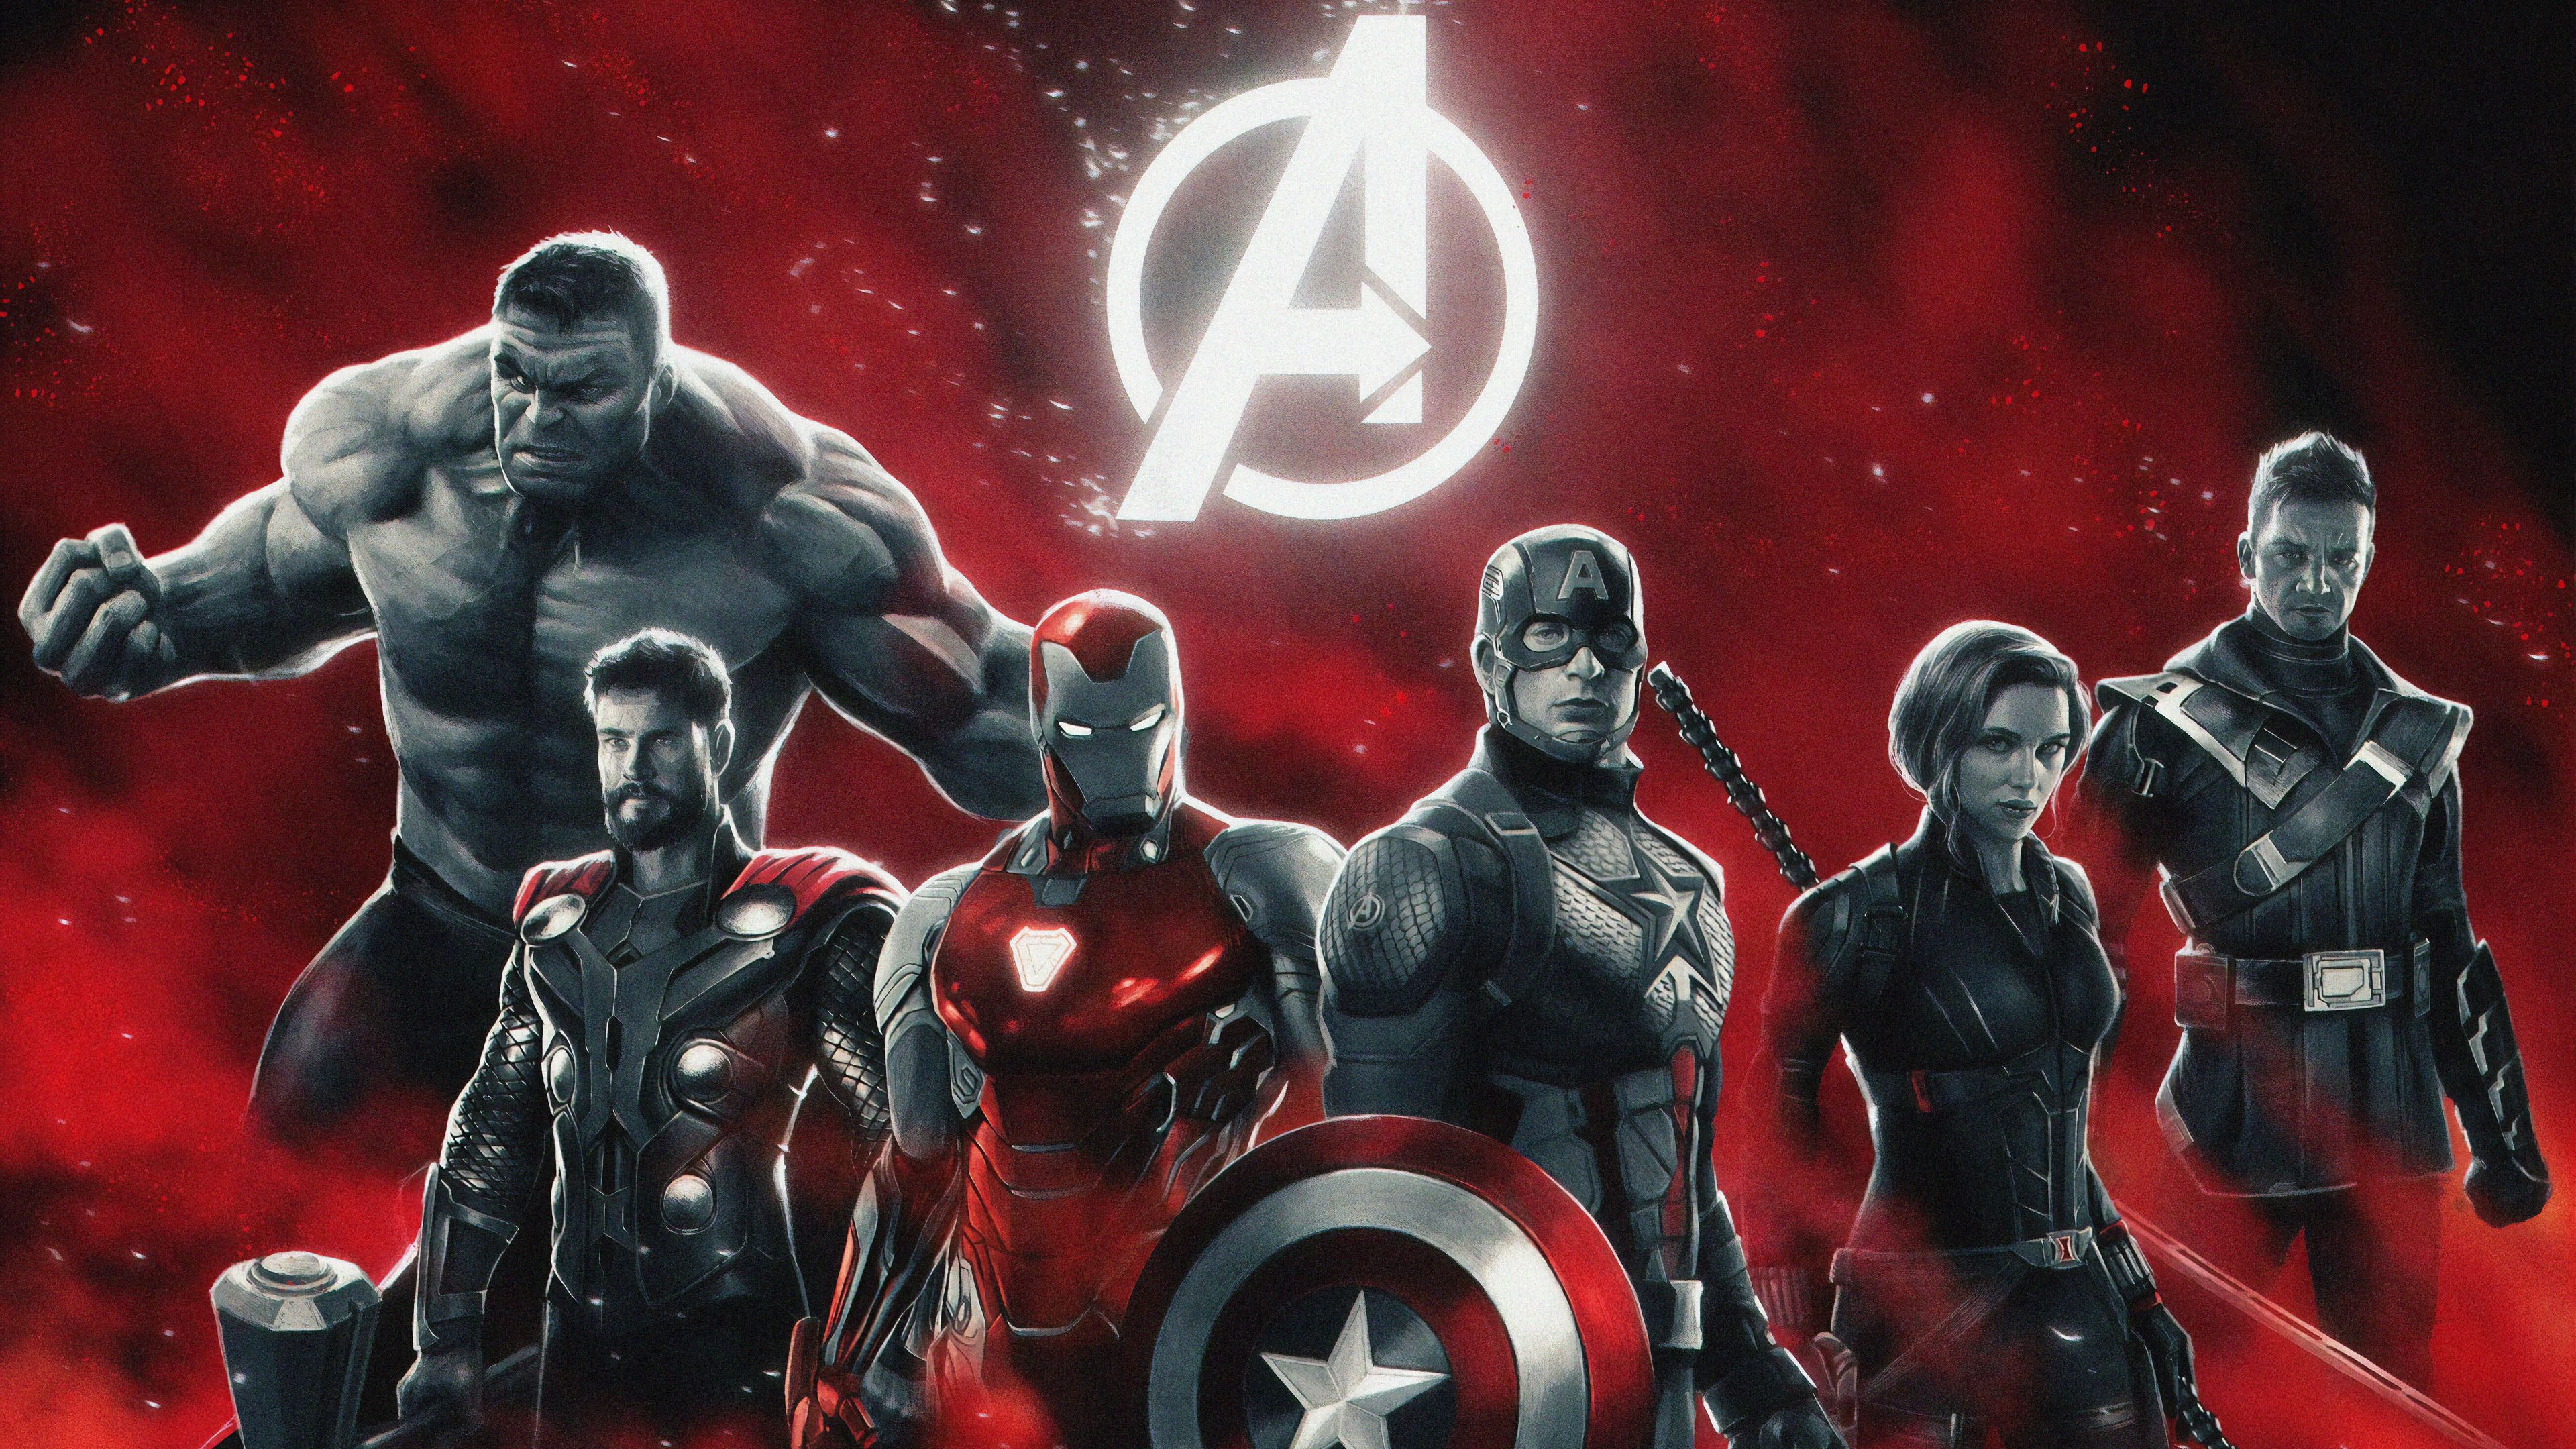 Marvels Avengers Superheroes 4K Wallpaper, HD Artist 4K Wallpaper, Image, Photo and Background